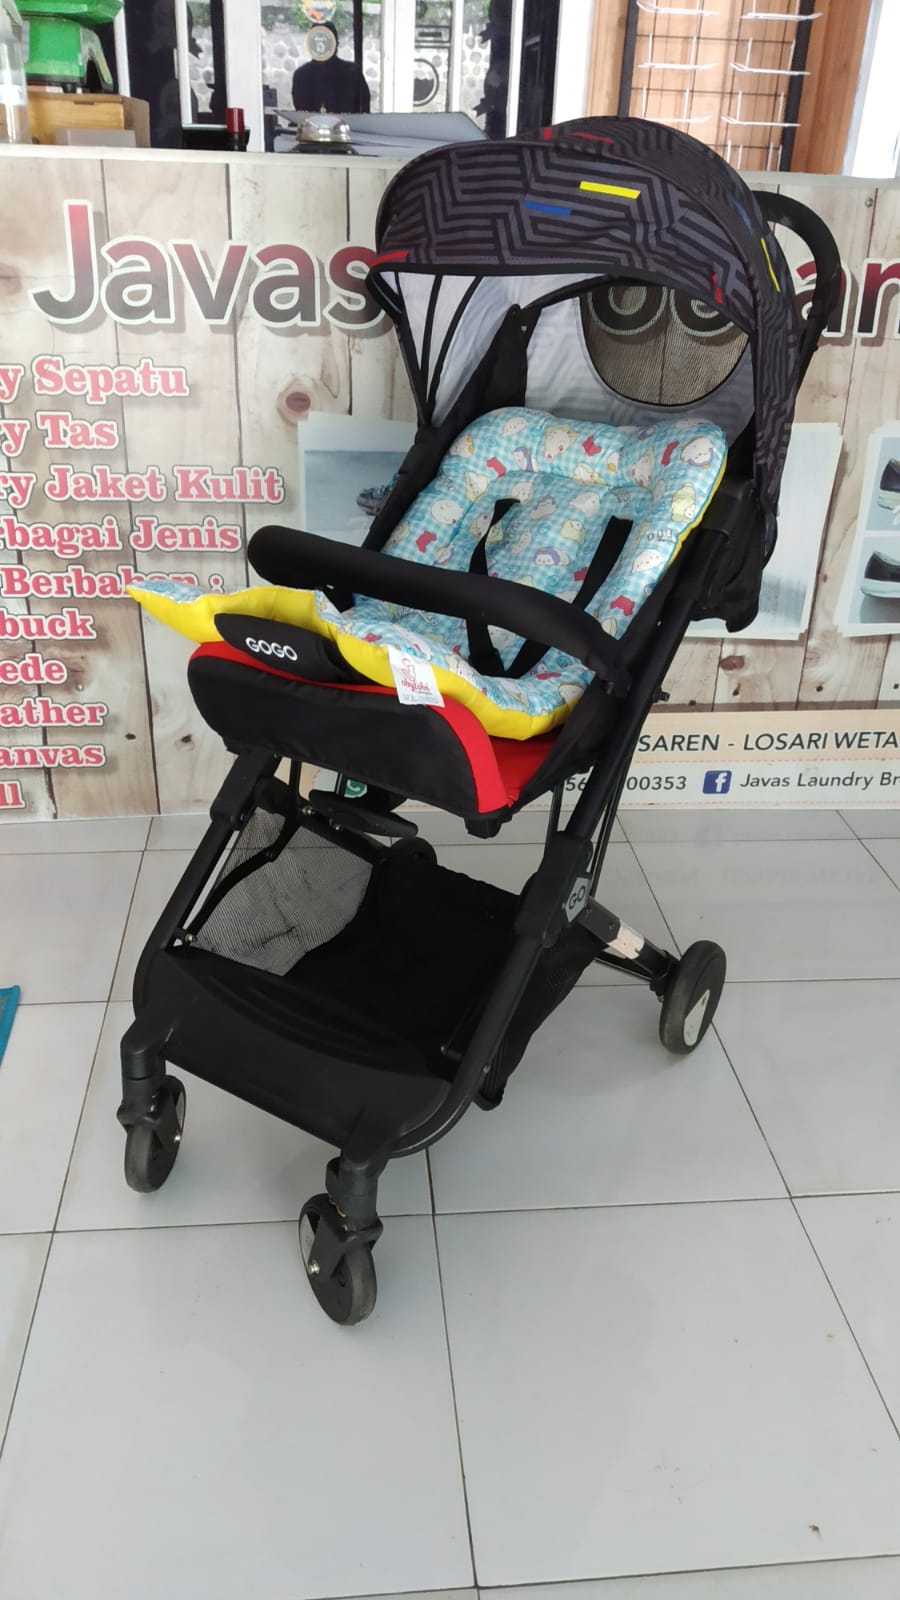 Cuci sofa cirebon - Laundry & Cuci Stroller Cirebon: Solusi Terbaik untuk Stroller Anda